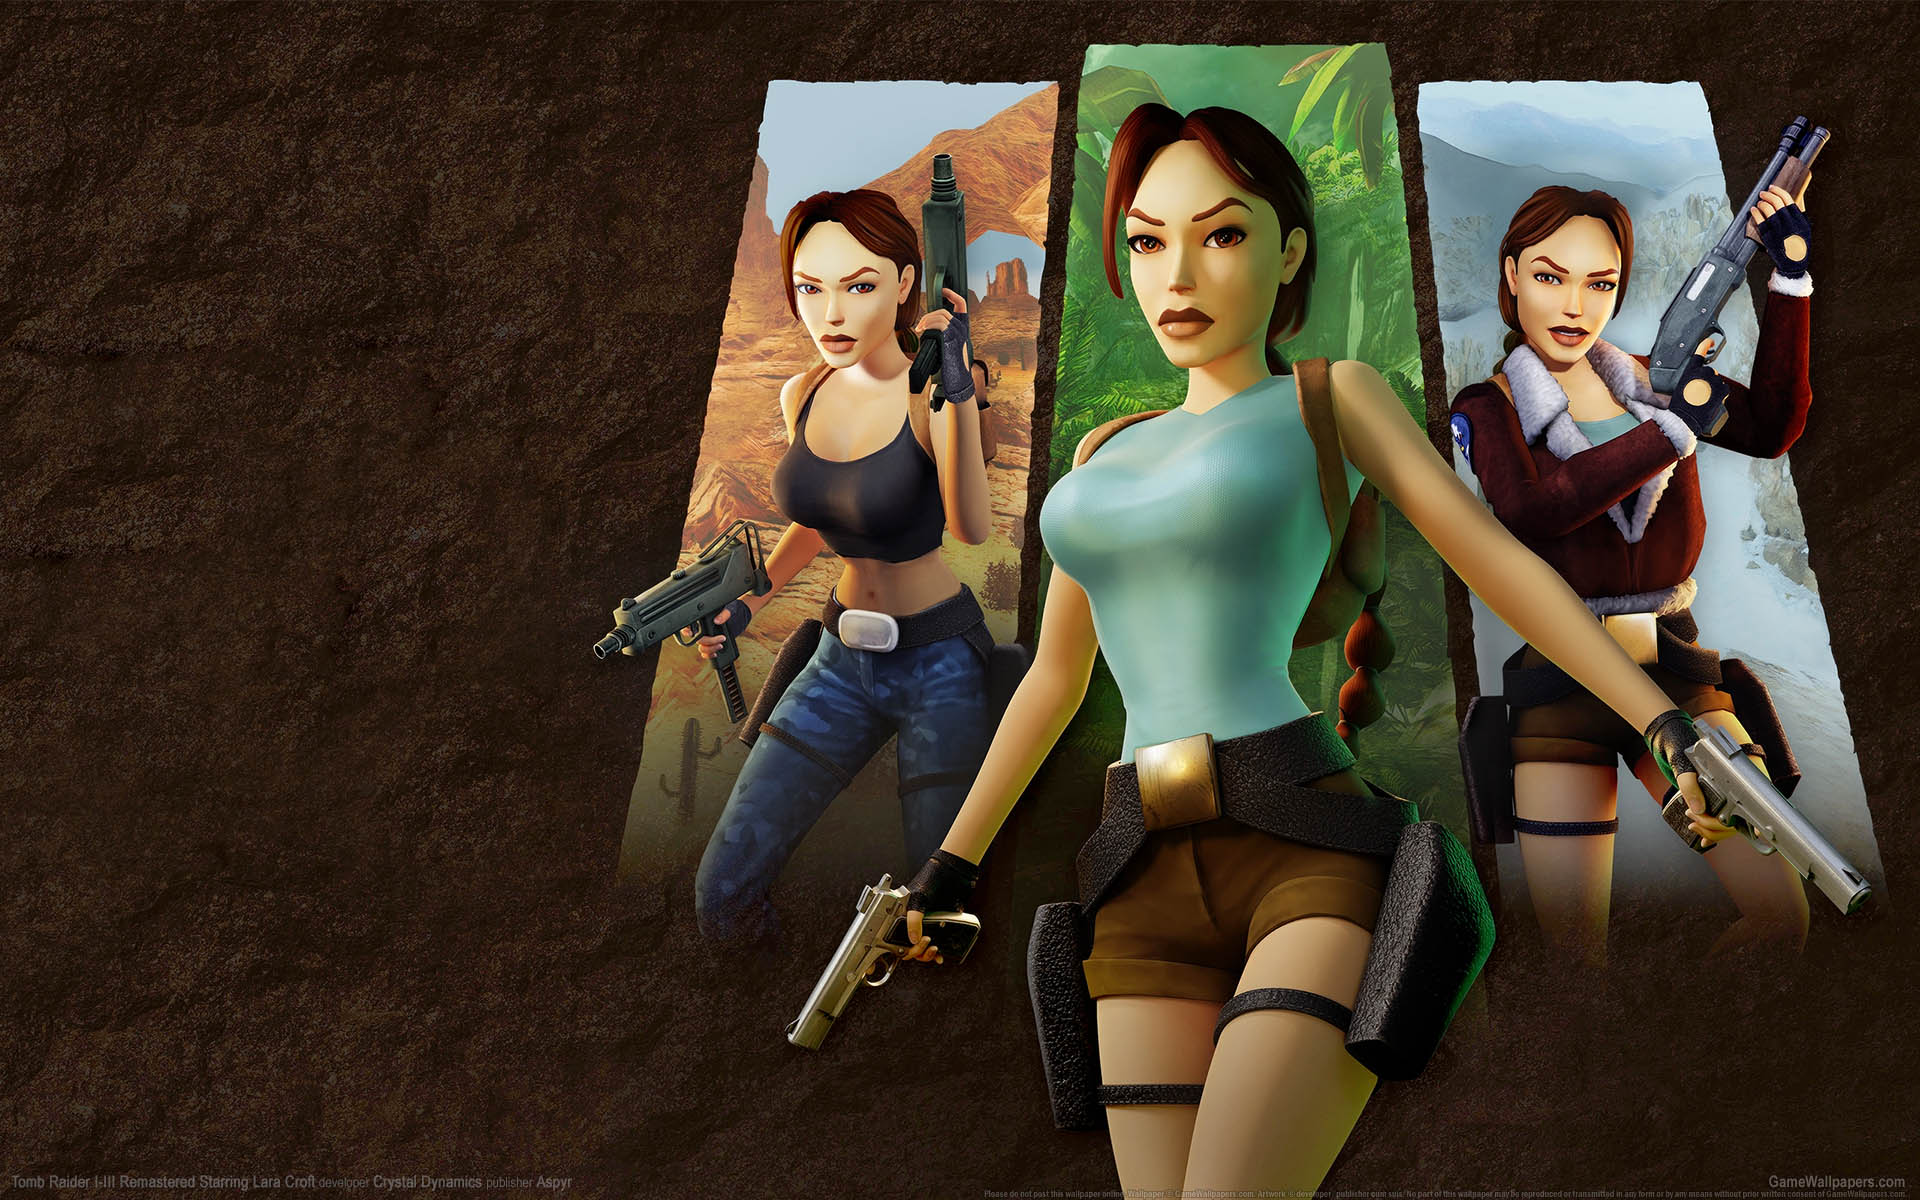 Tomb Raider I-III Remastered Starring Lara Croft fondo de escritorio 01 1920x1200